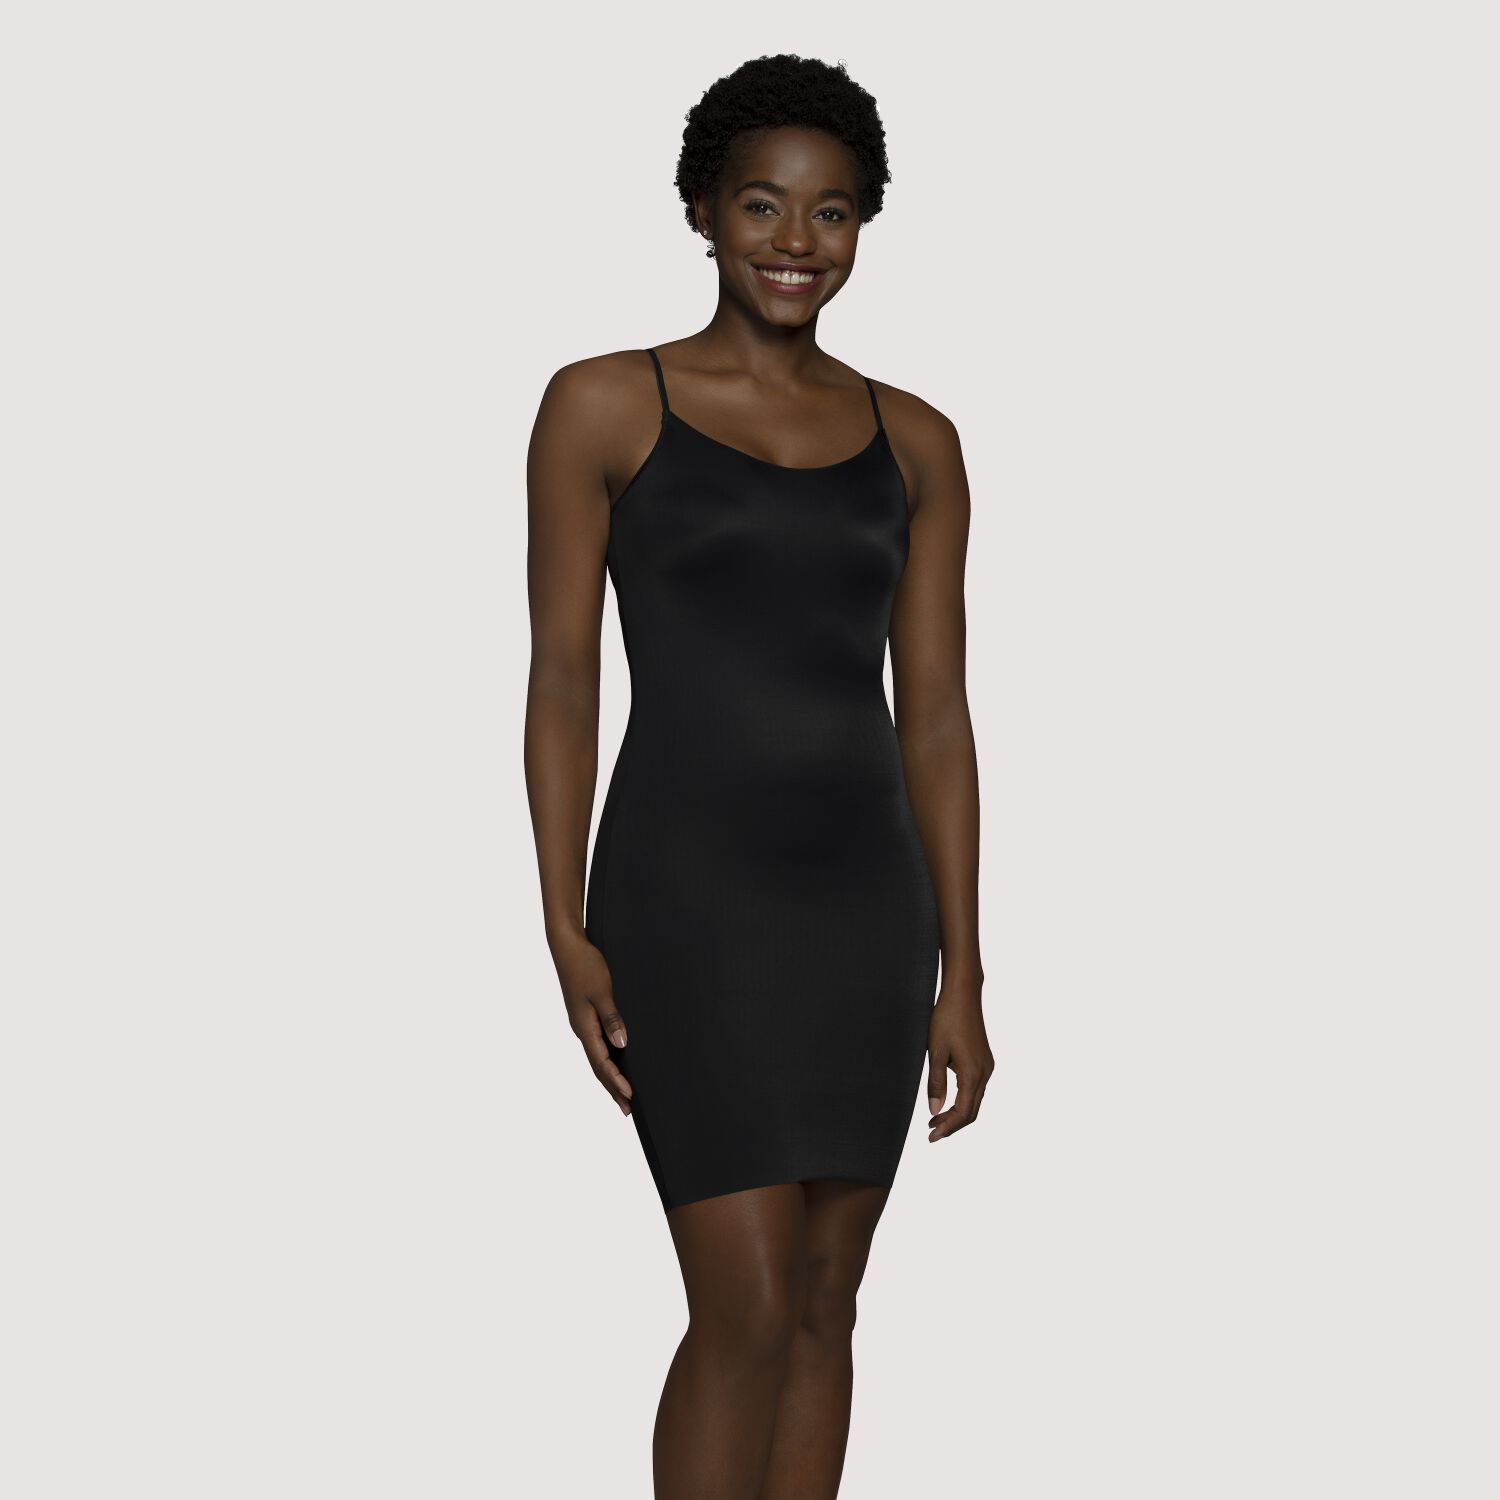 S-xxl Size Full Length Control Slips Women Shapewear Underwear Dress With  Underwire Cup Body Shapers Black Beige Gray